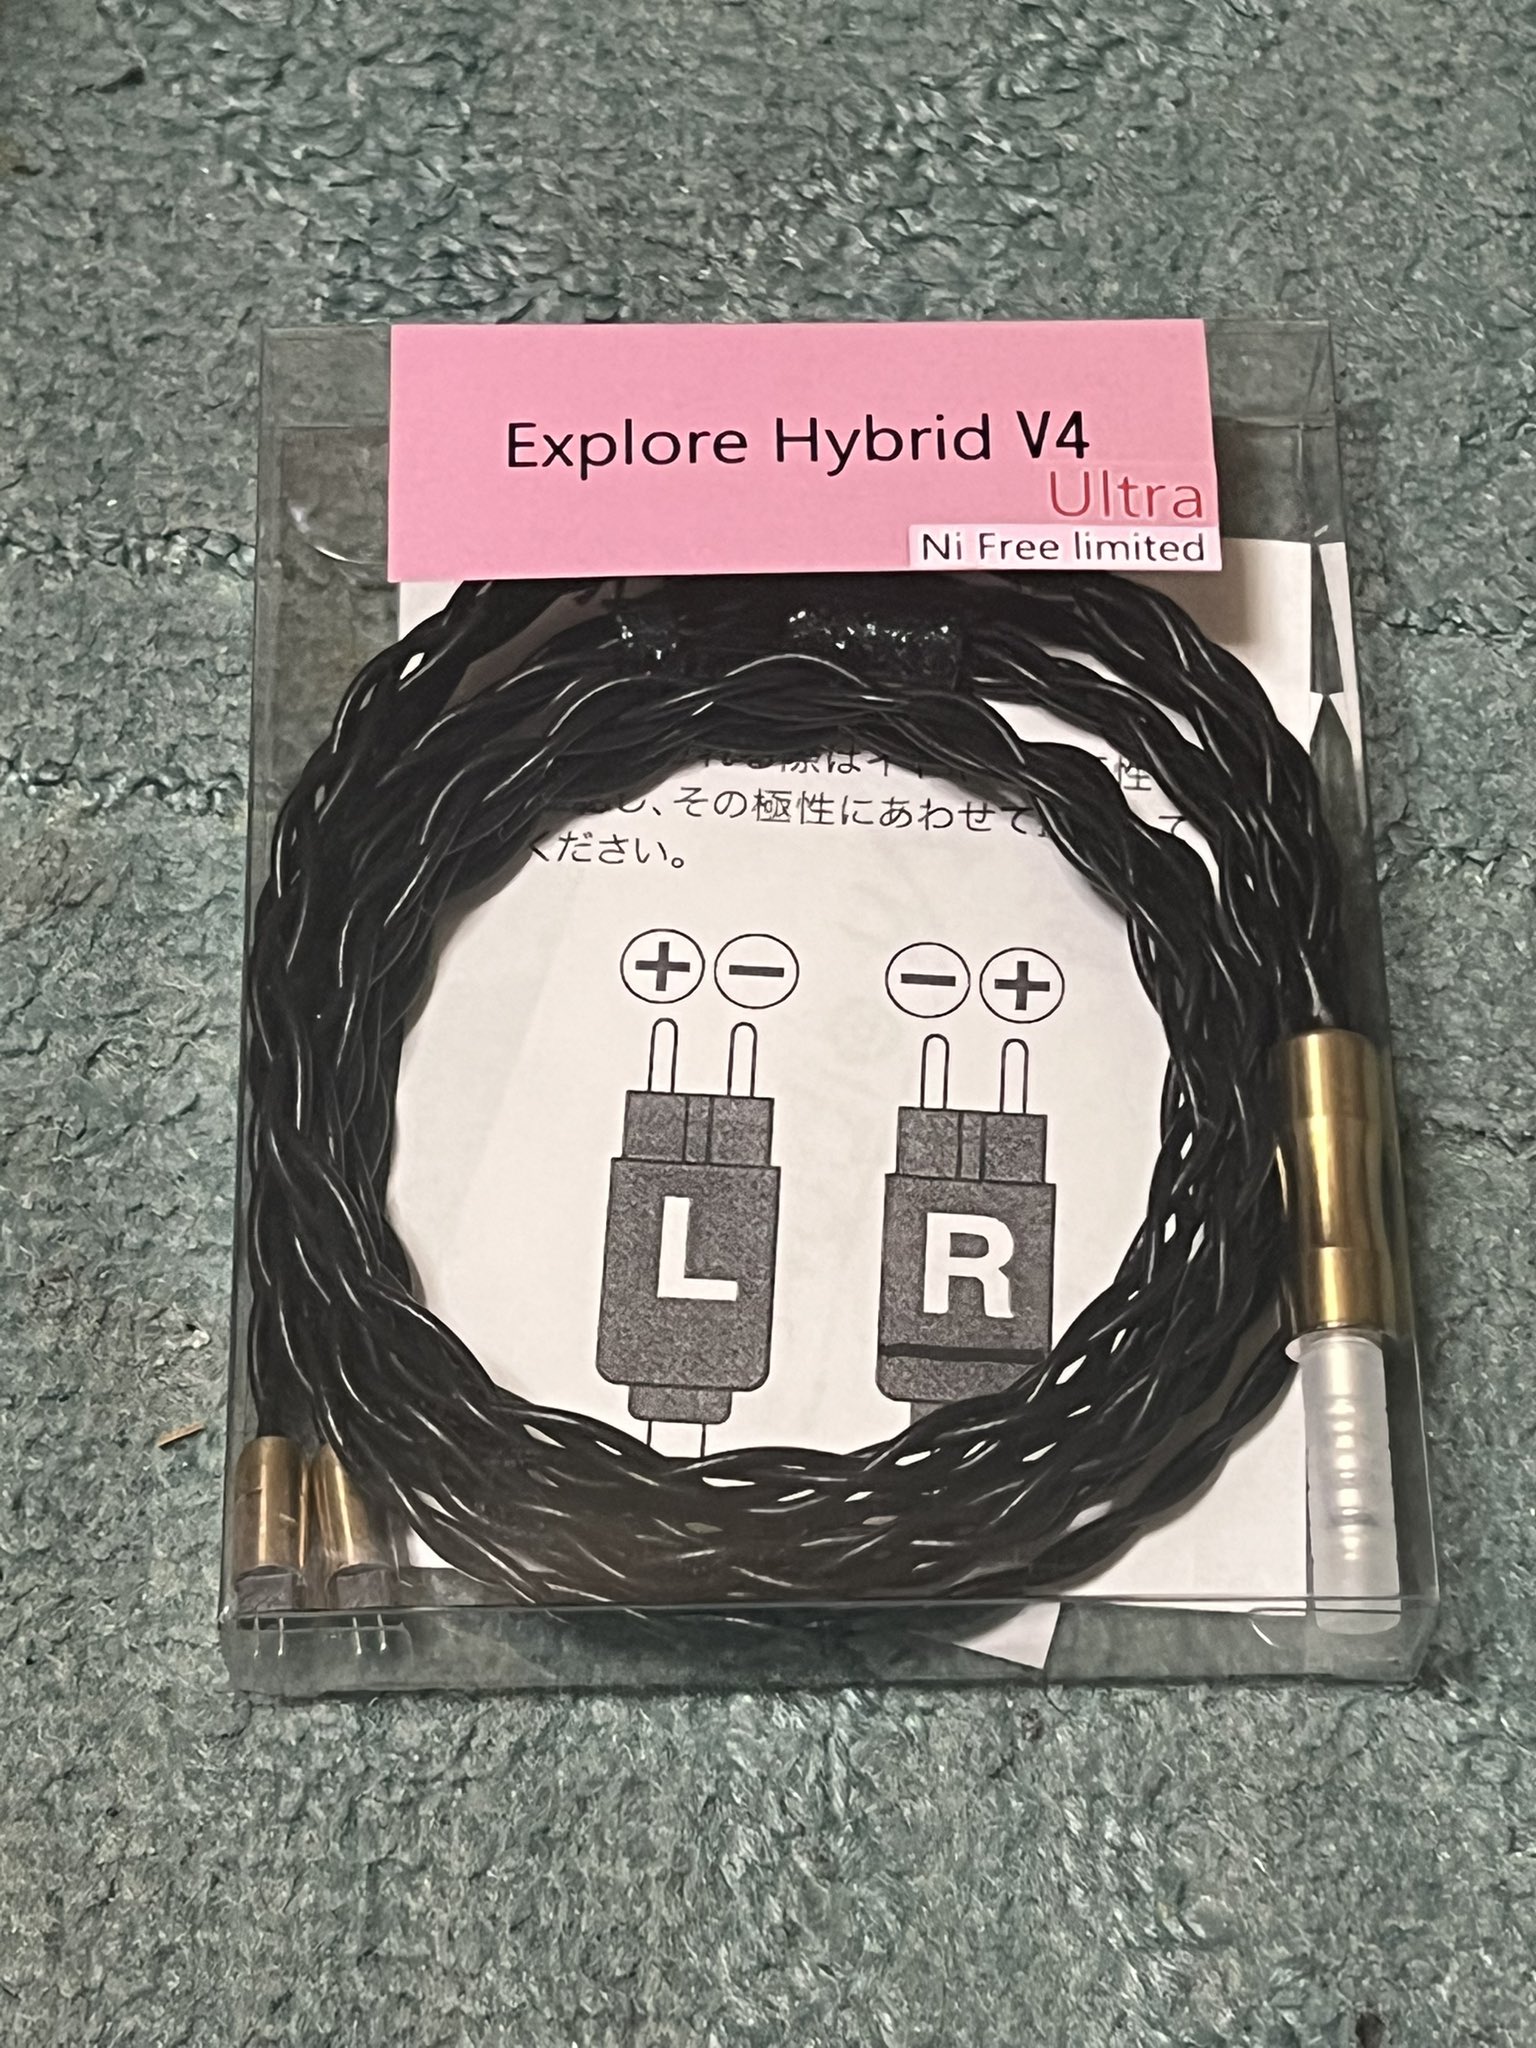 Explore Hybrid V4